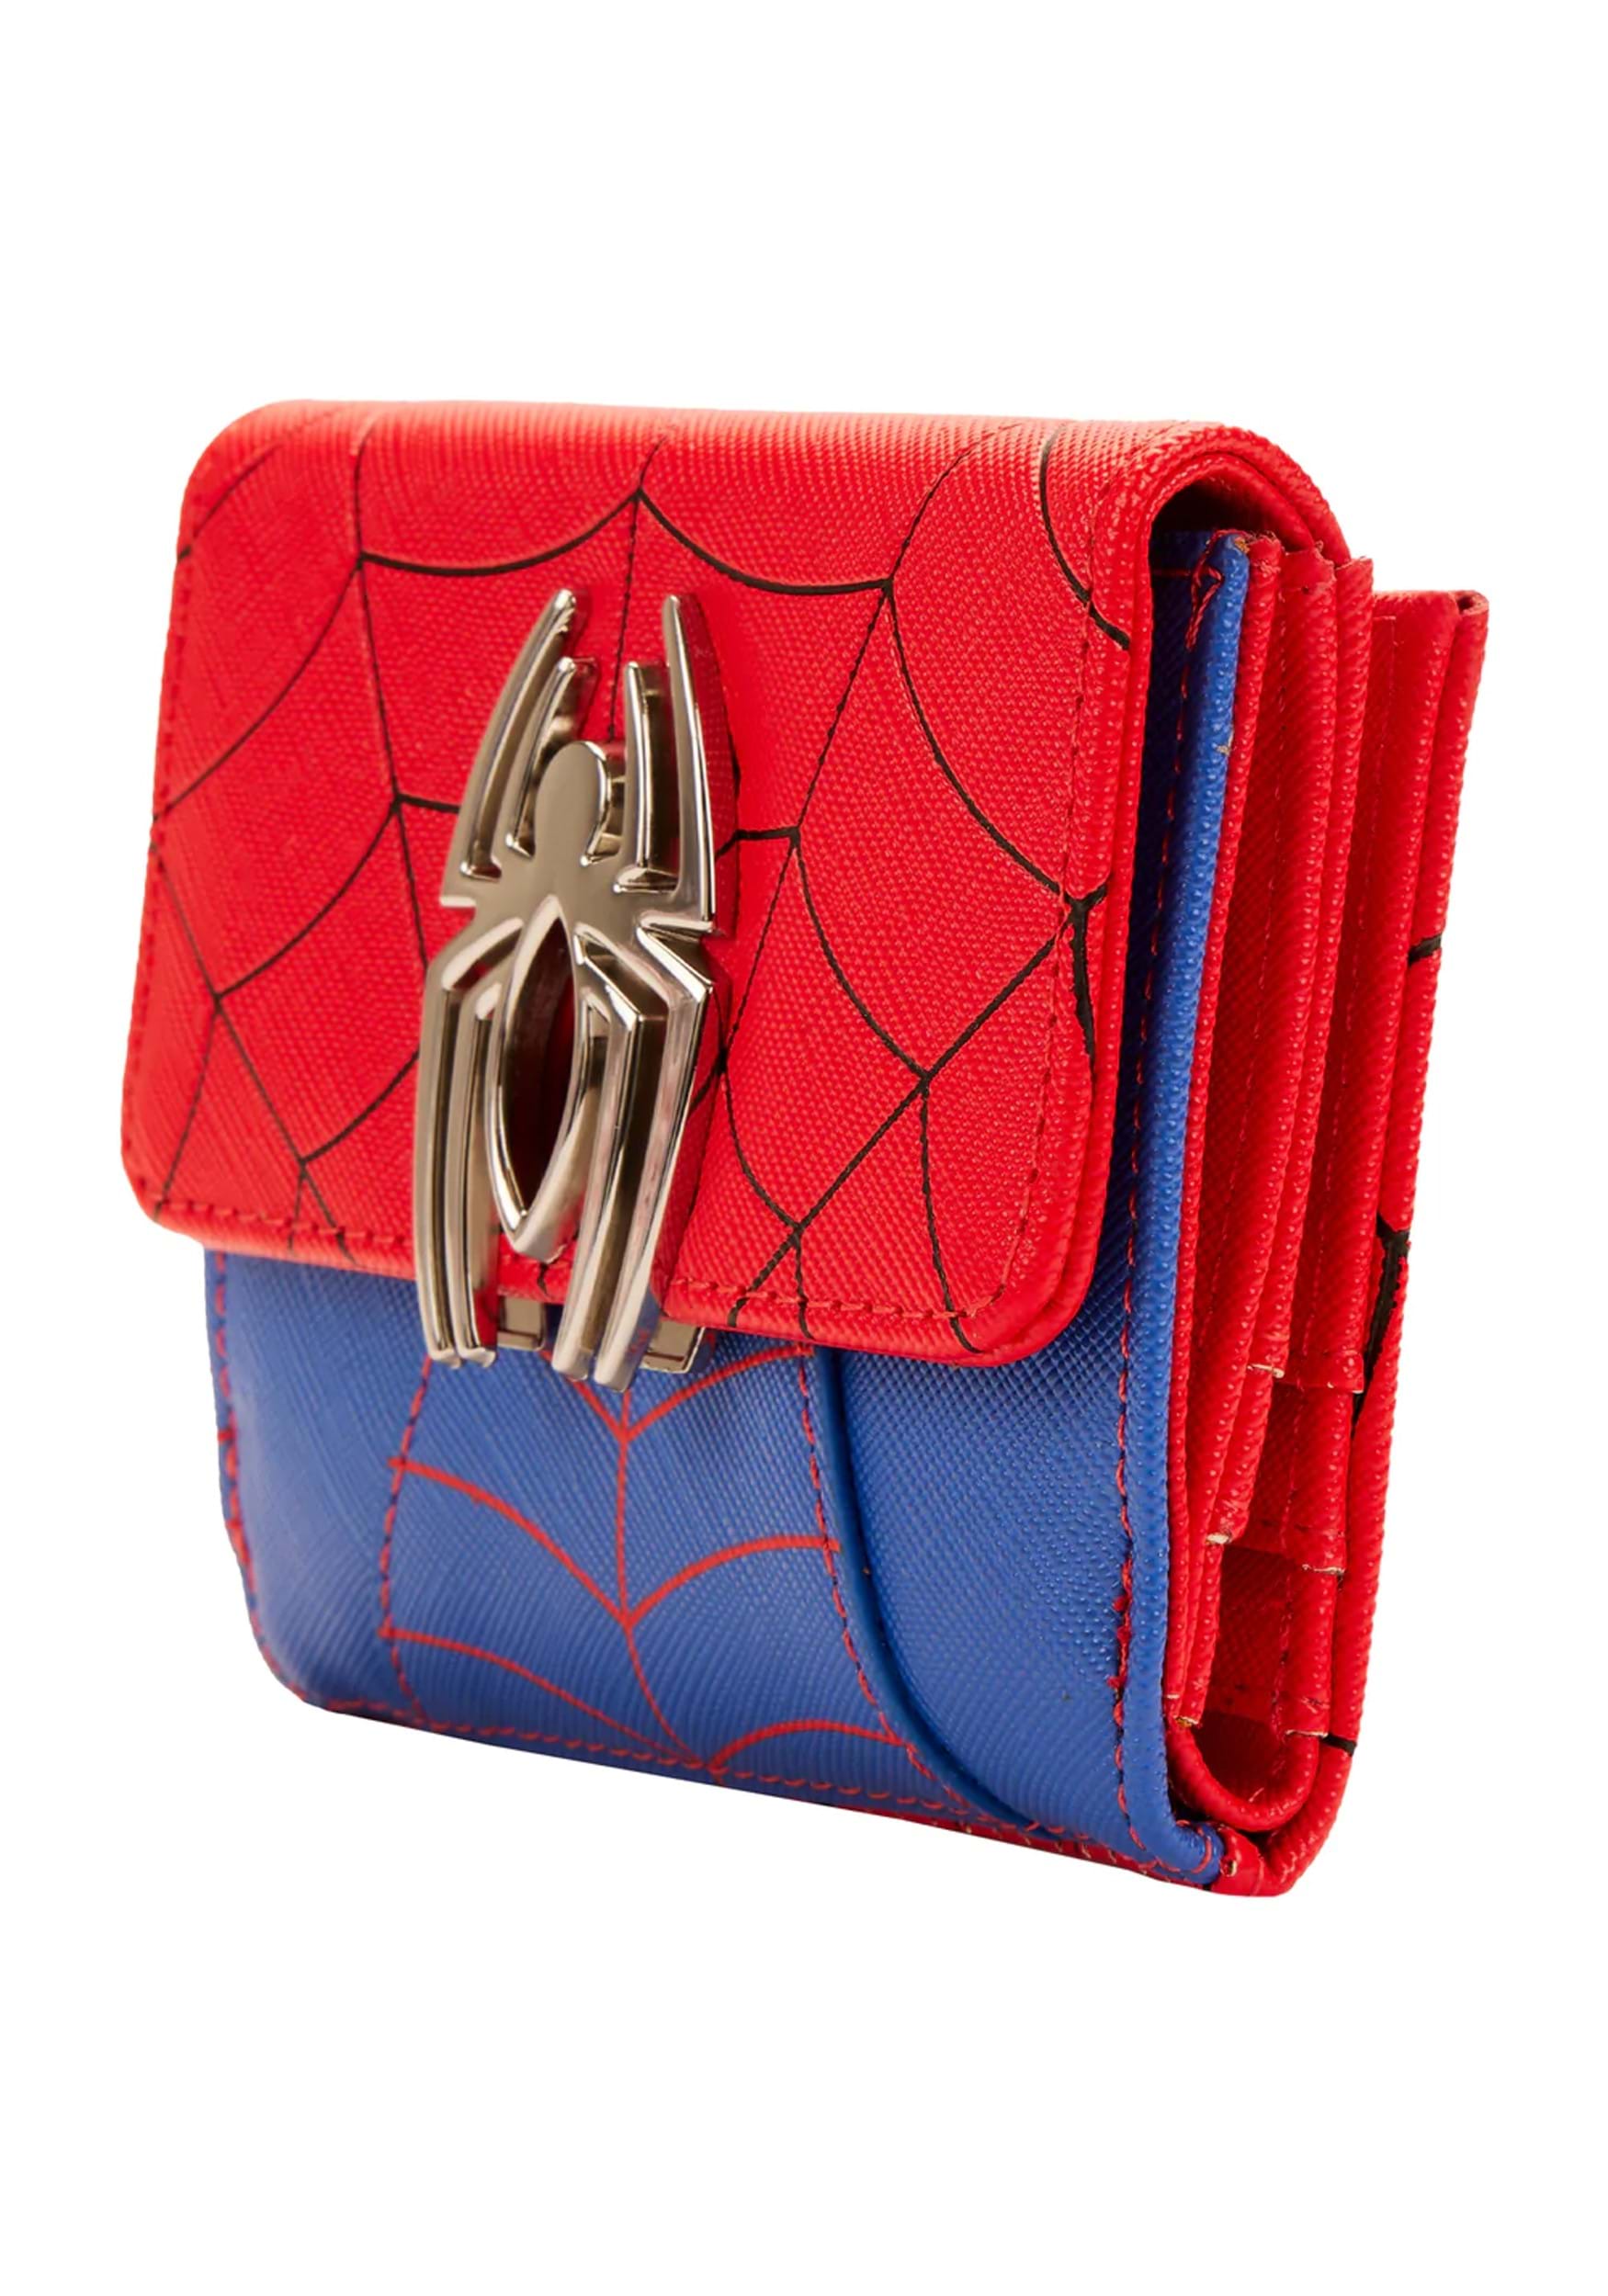 Marvel Spider-Man Color Block Loungefly Wallet